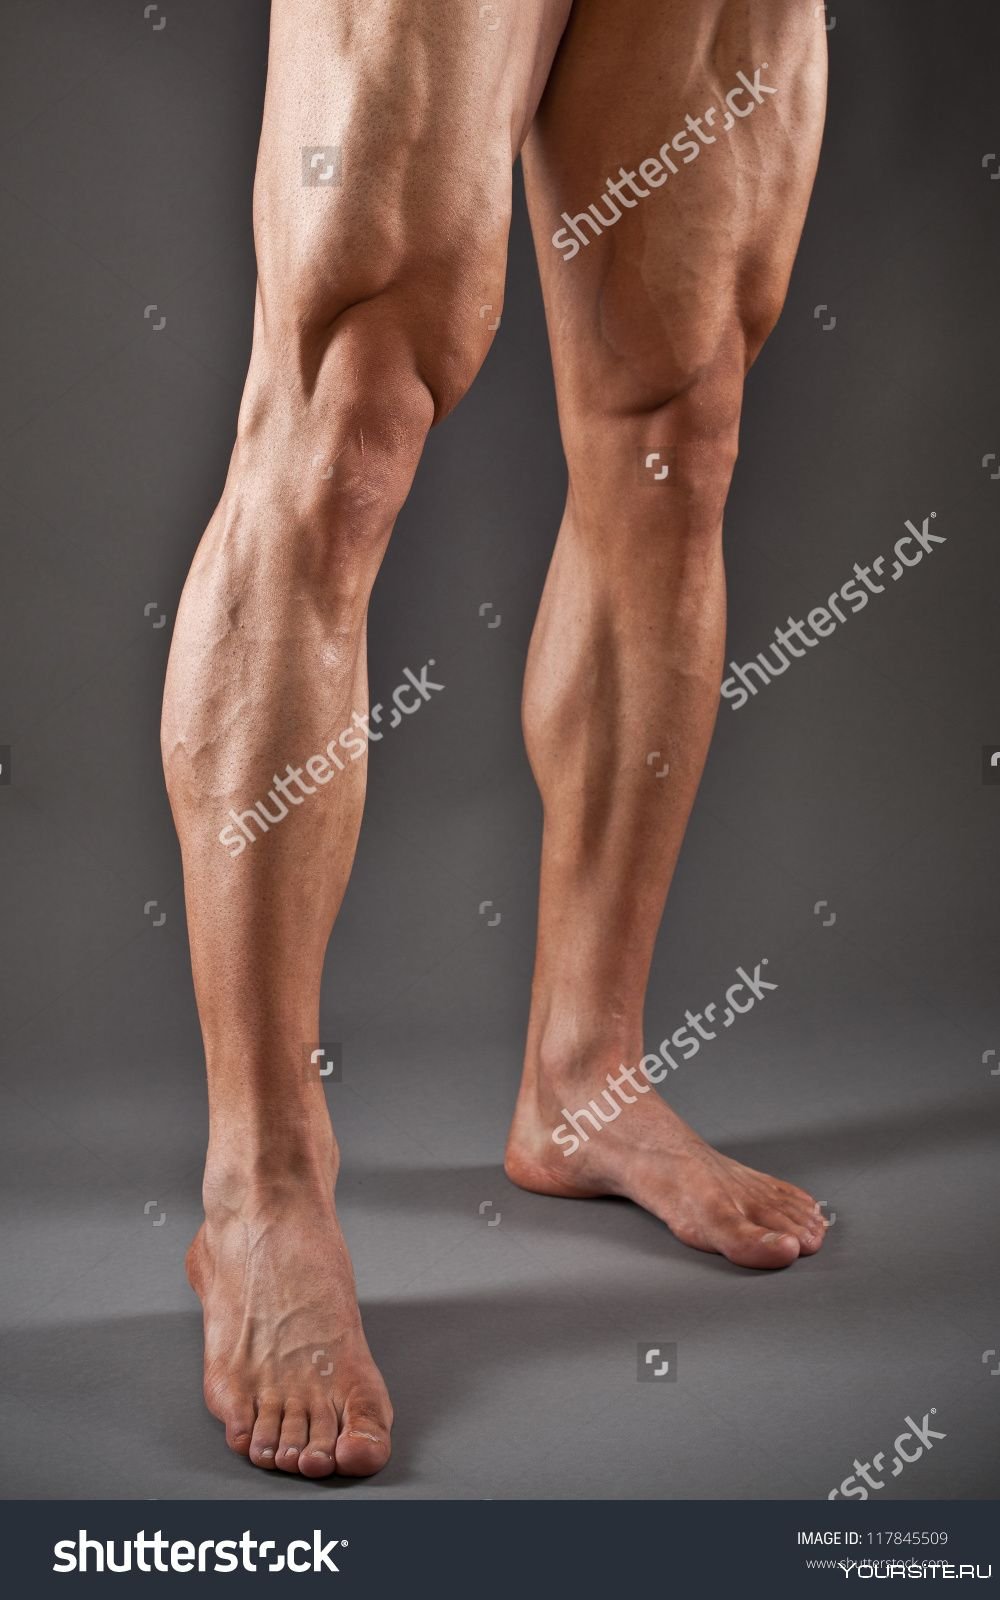 Cut legs